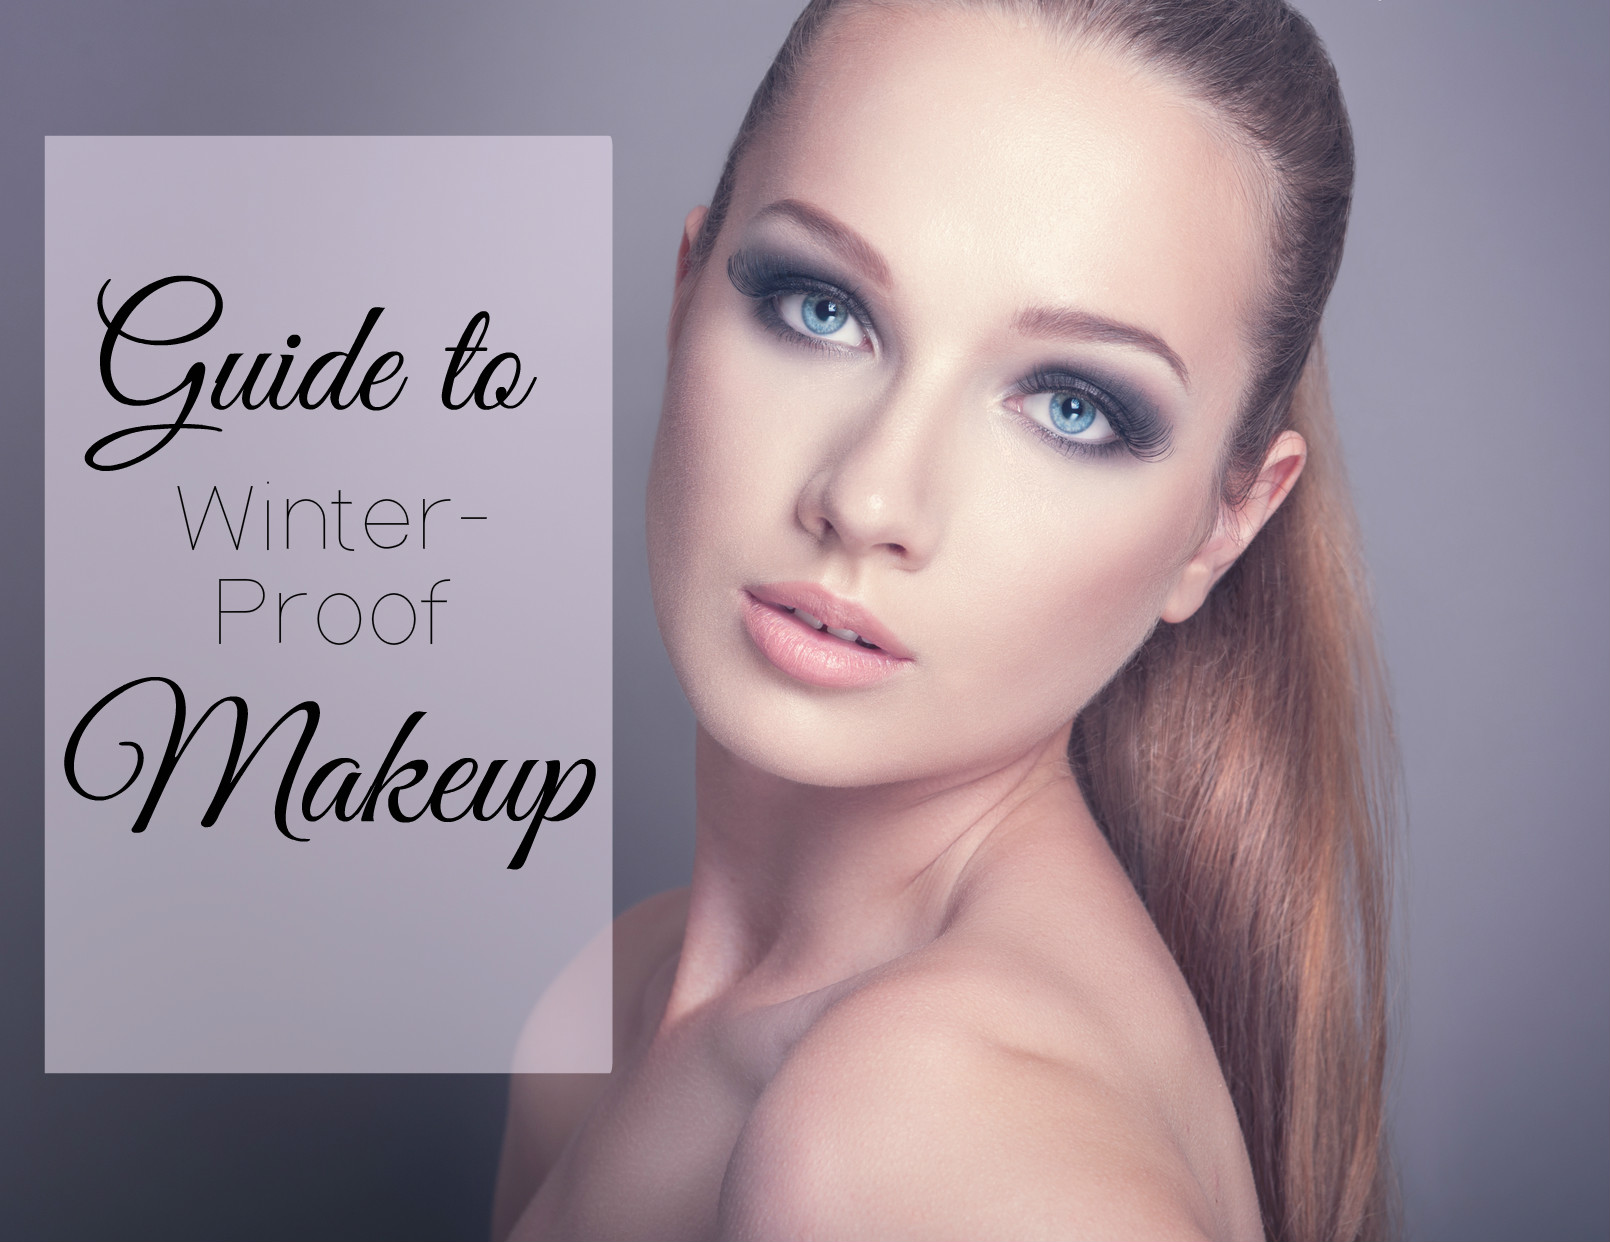 winter-proof your makeup